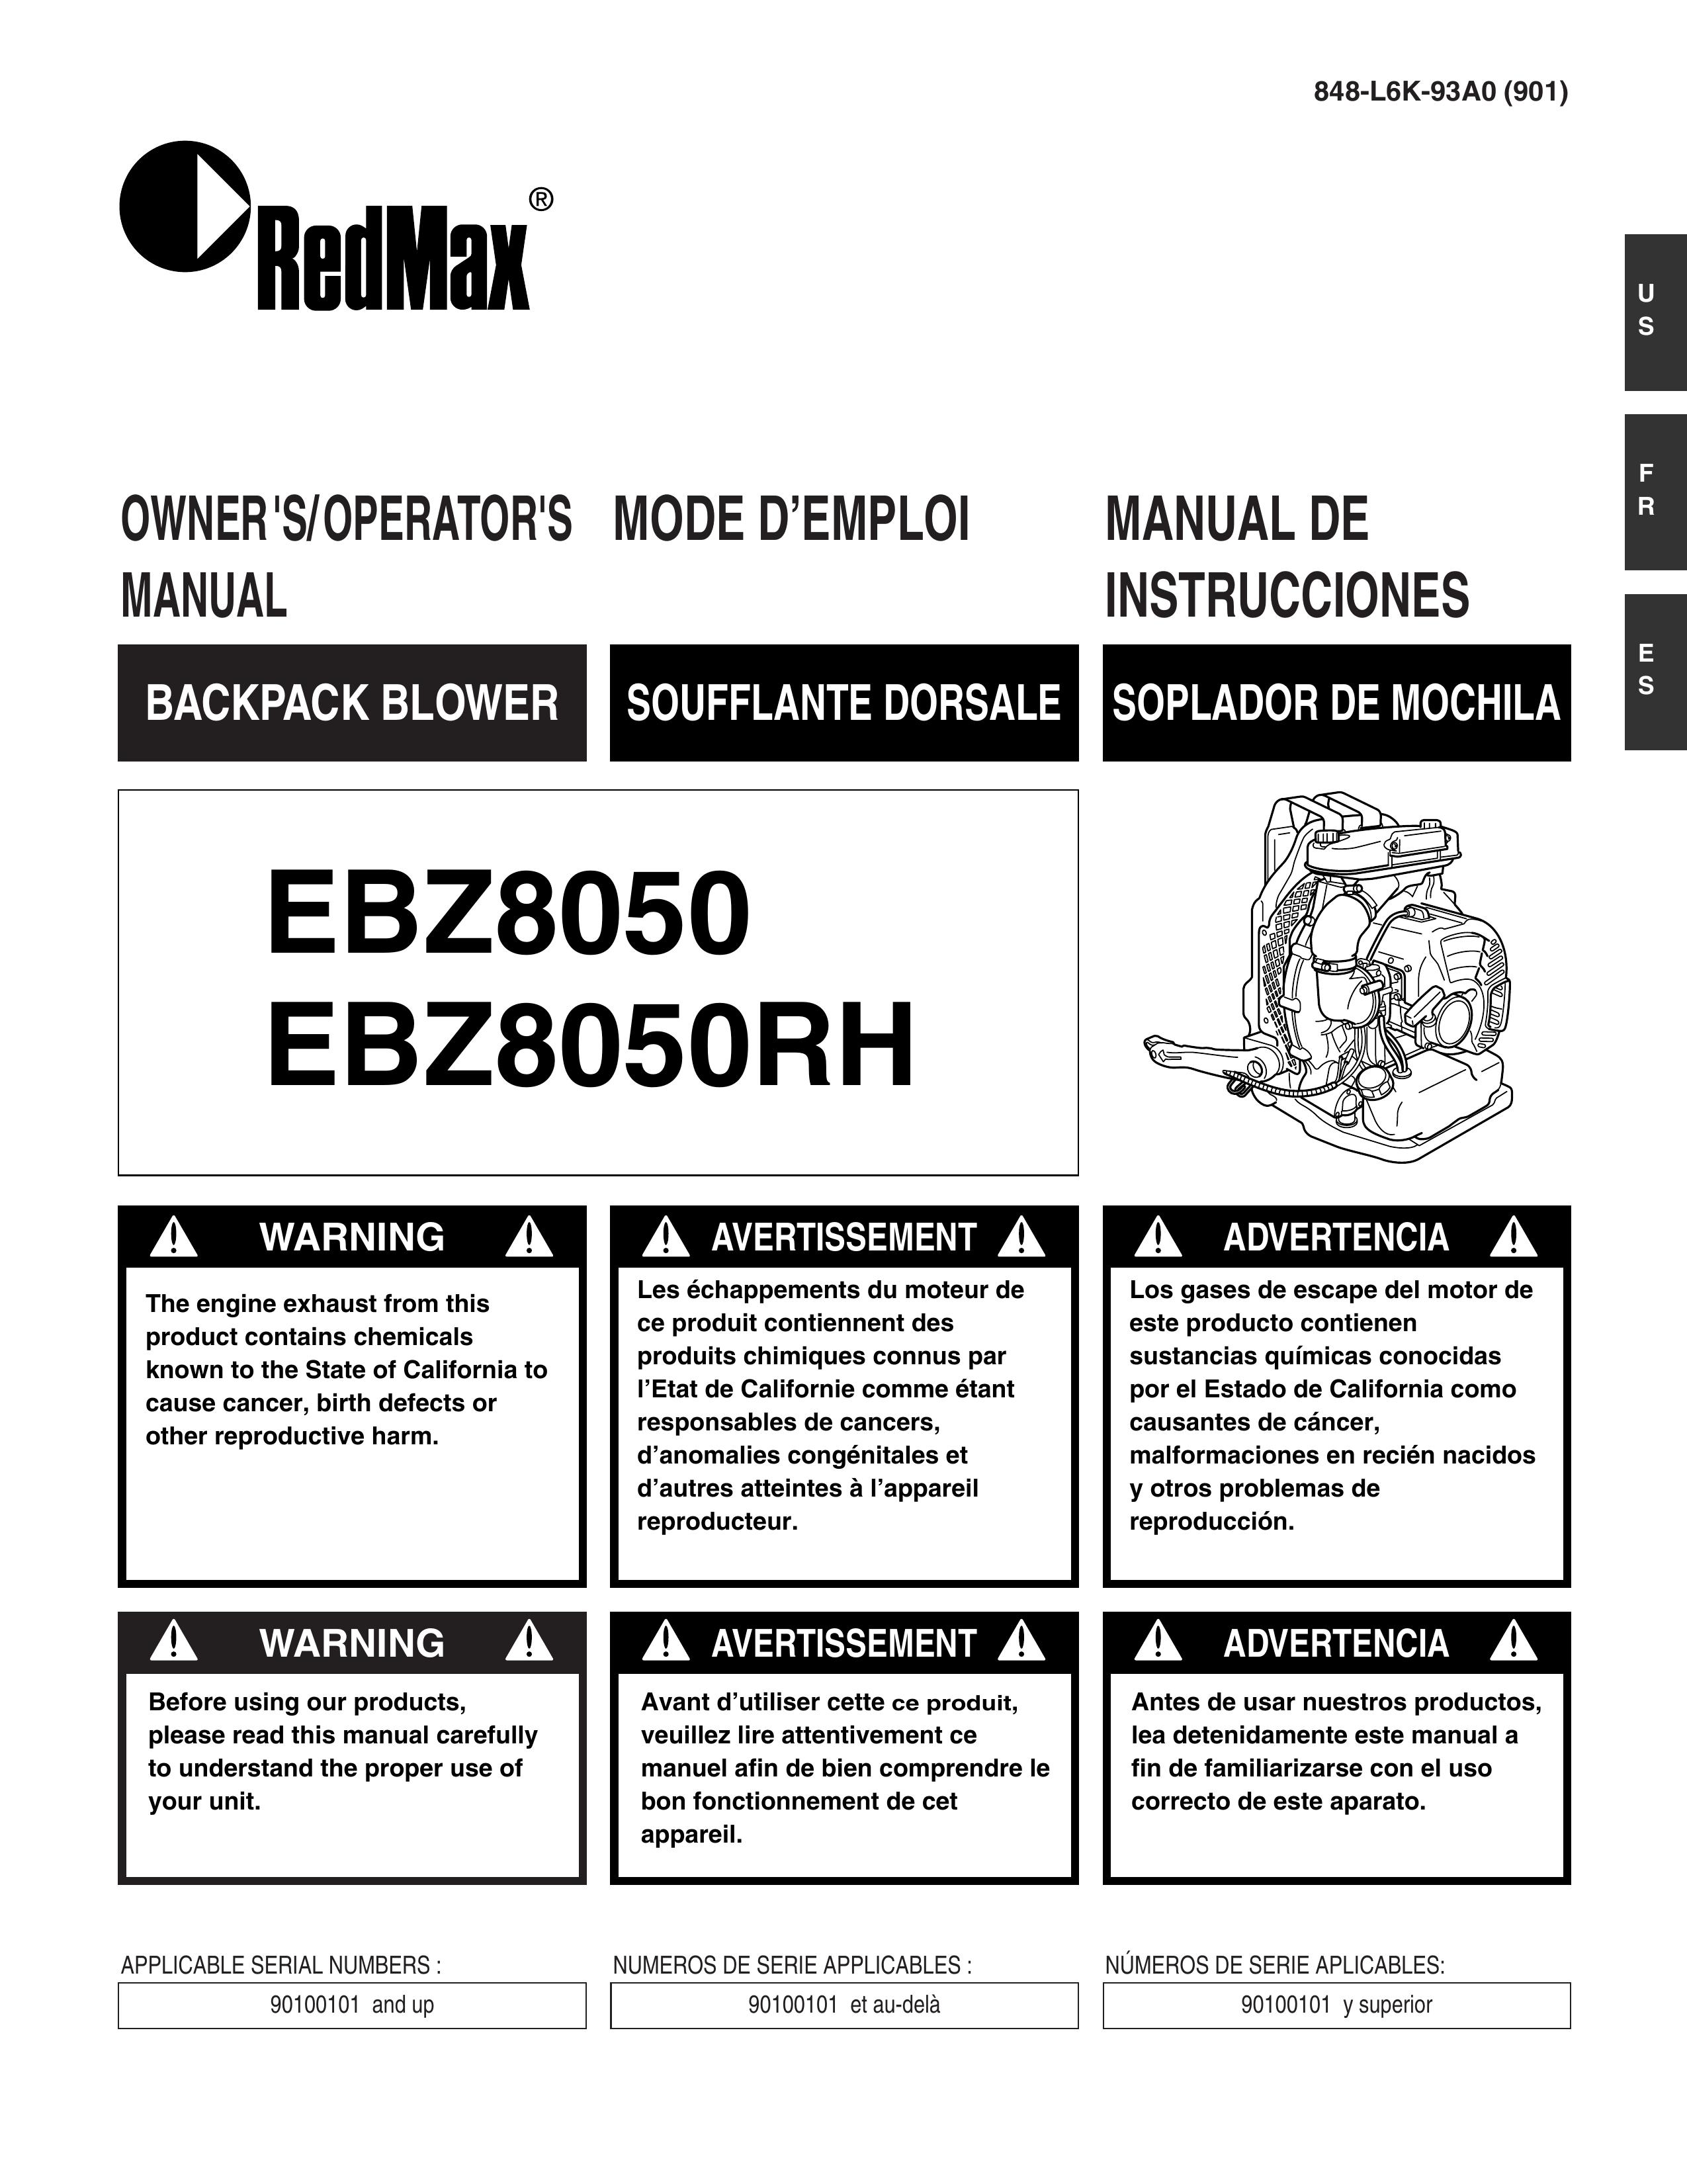 RedMax EBZ8050RH Blower User Manual